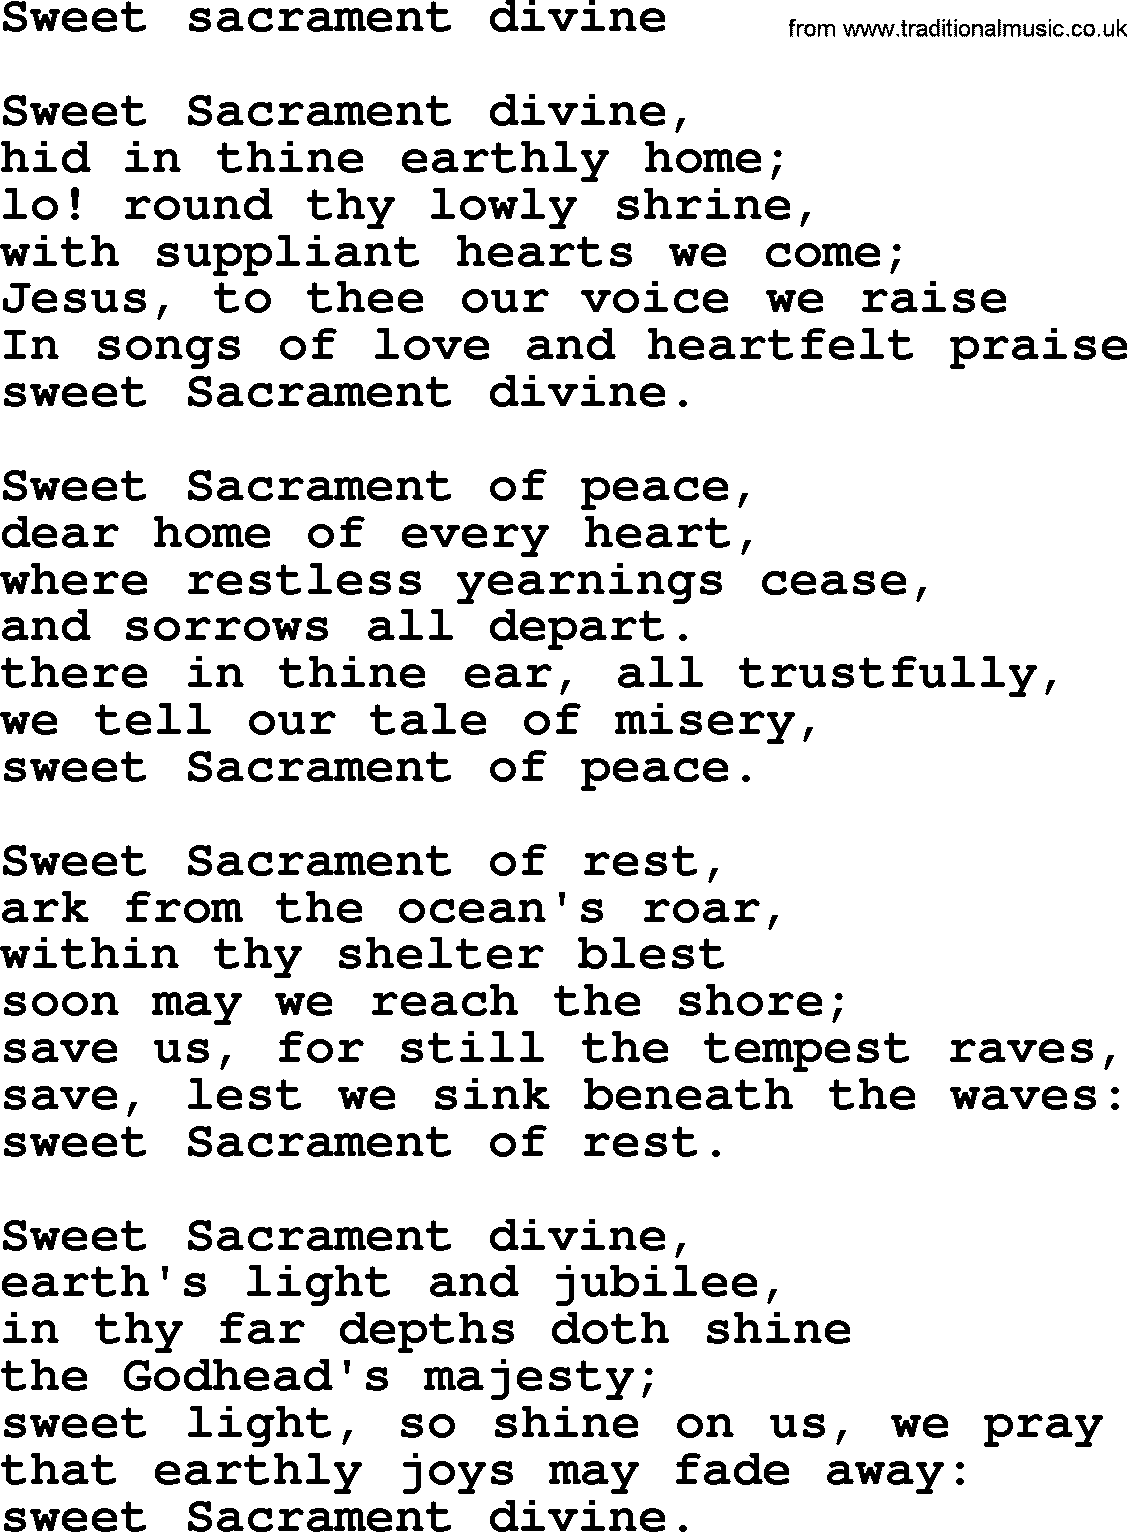 Christian hymns and song lyrics for Communion(The Eucharist): Sweet Sacrament Divine, lyrics with PDF